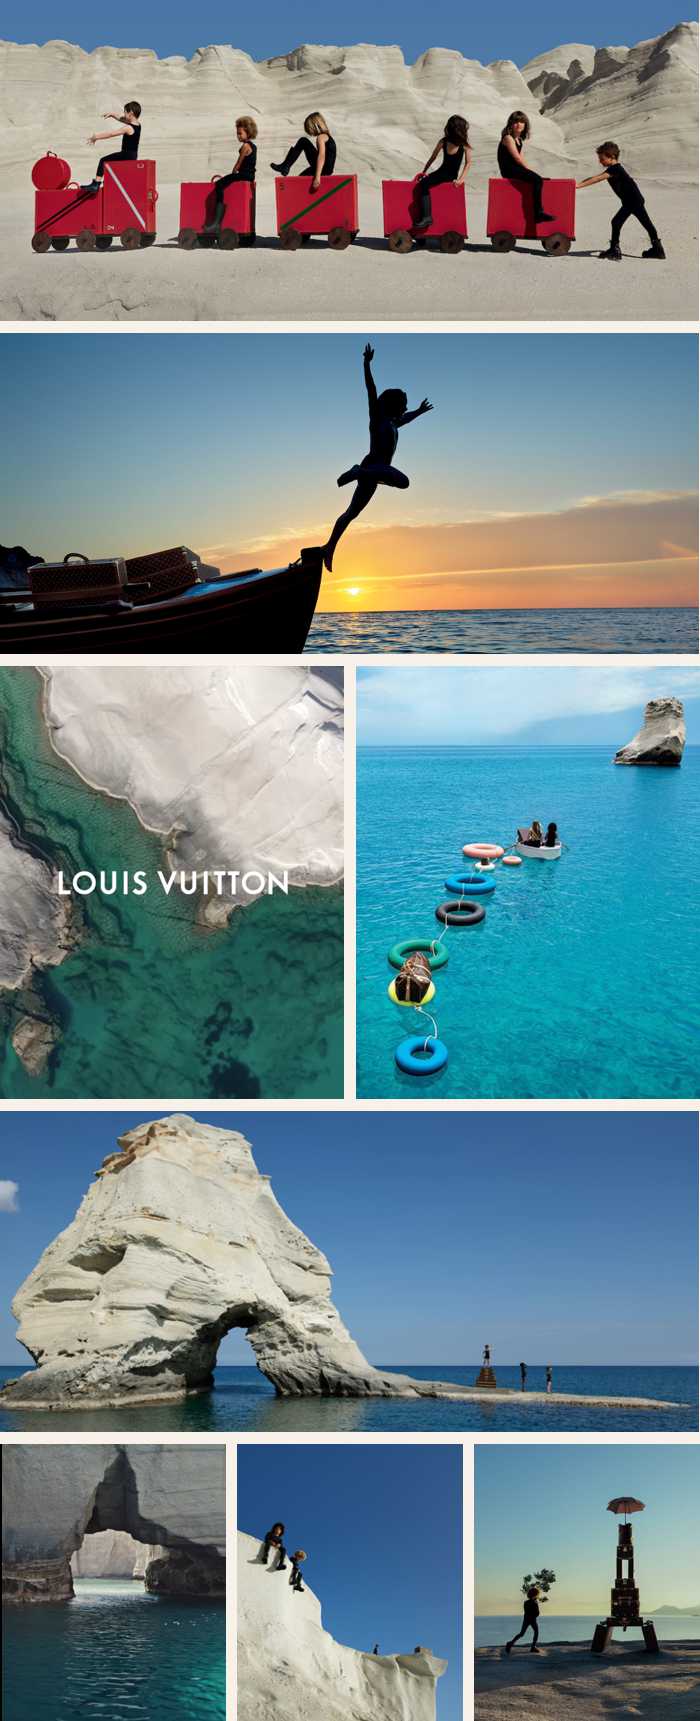 Milos scenery in Louis Vuitton Towards a Dream ad campaign